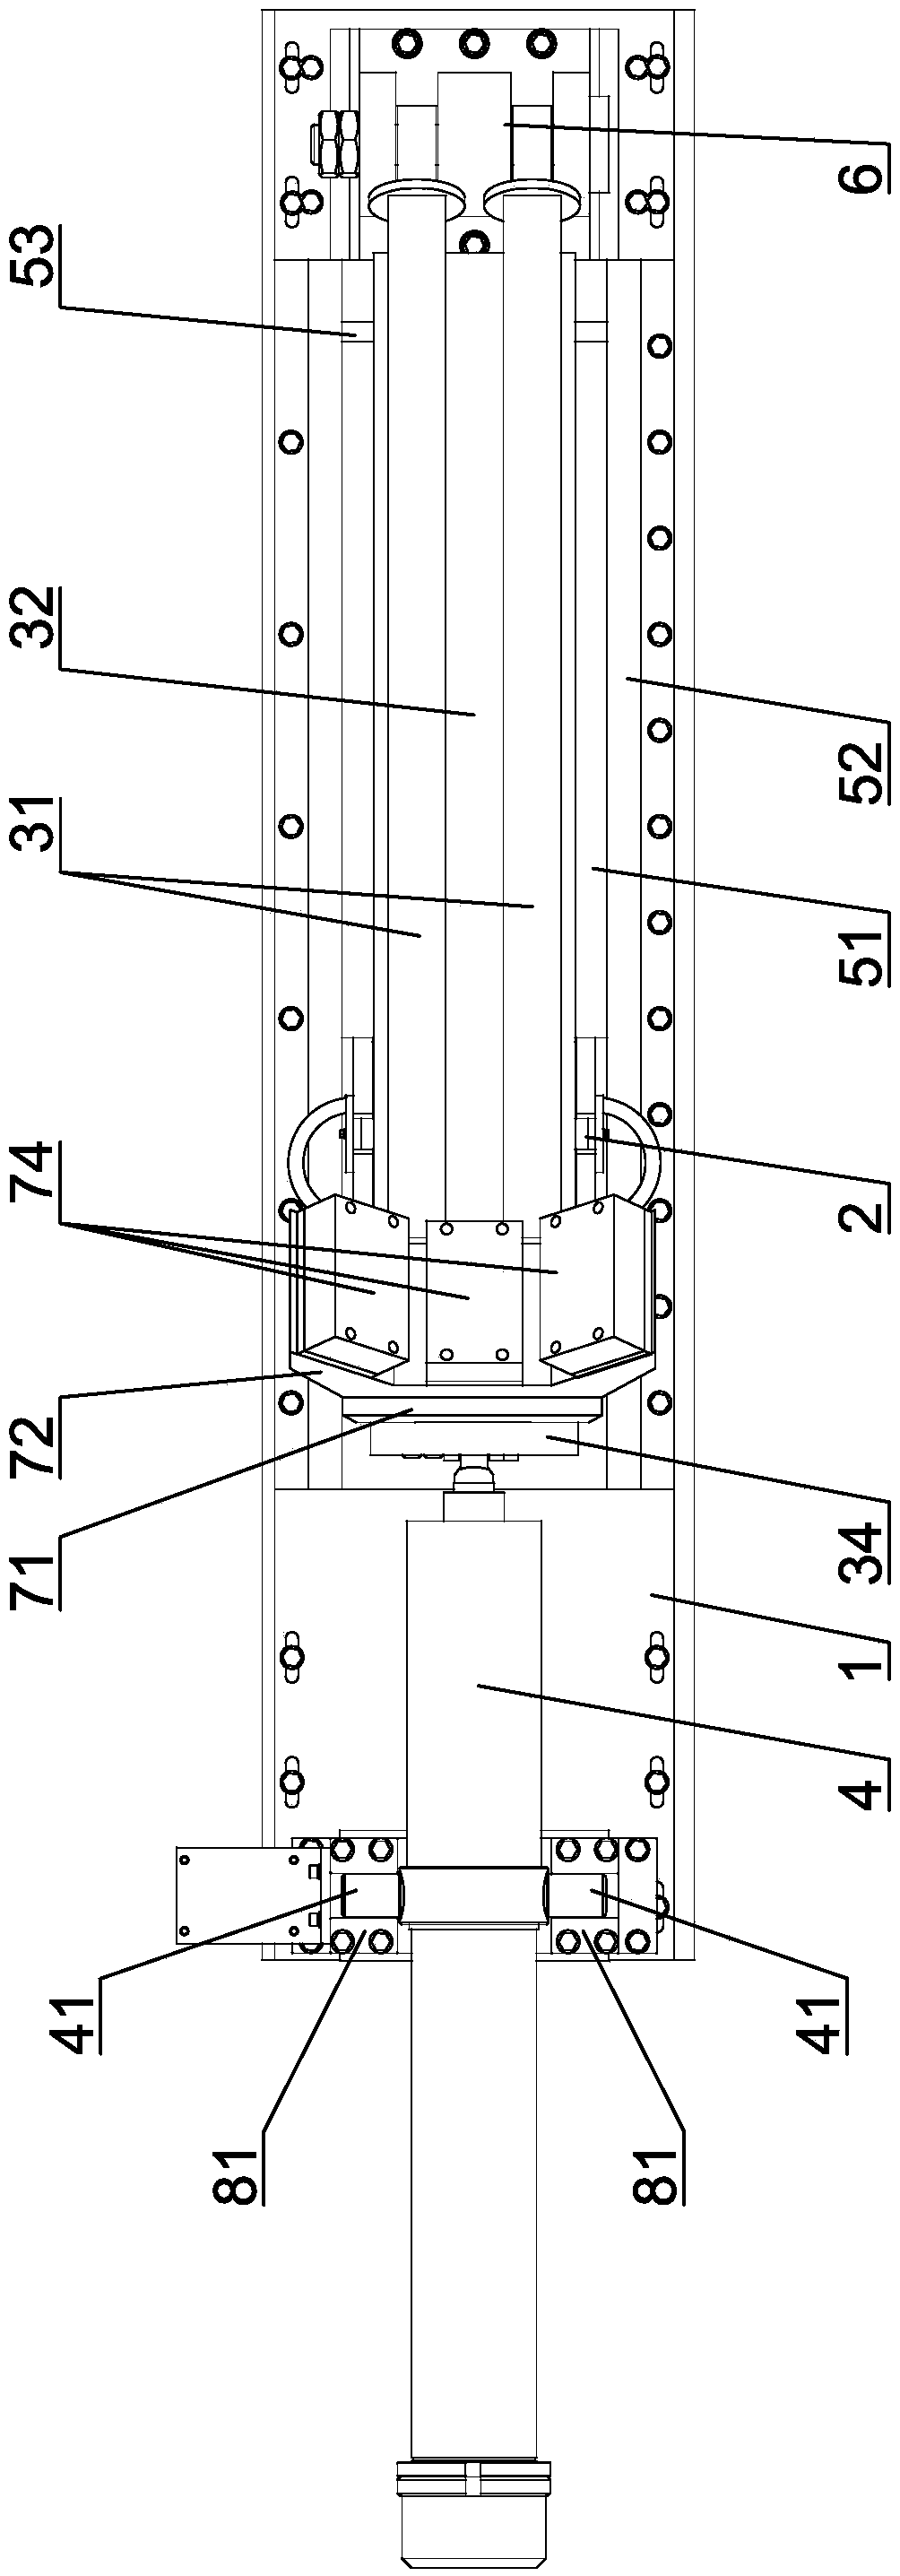 Rapid erection conversion device for large erection oil cylinder